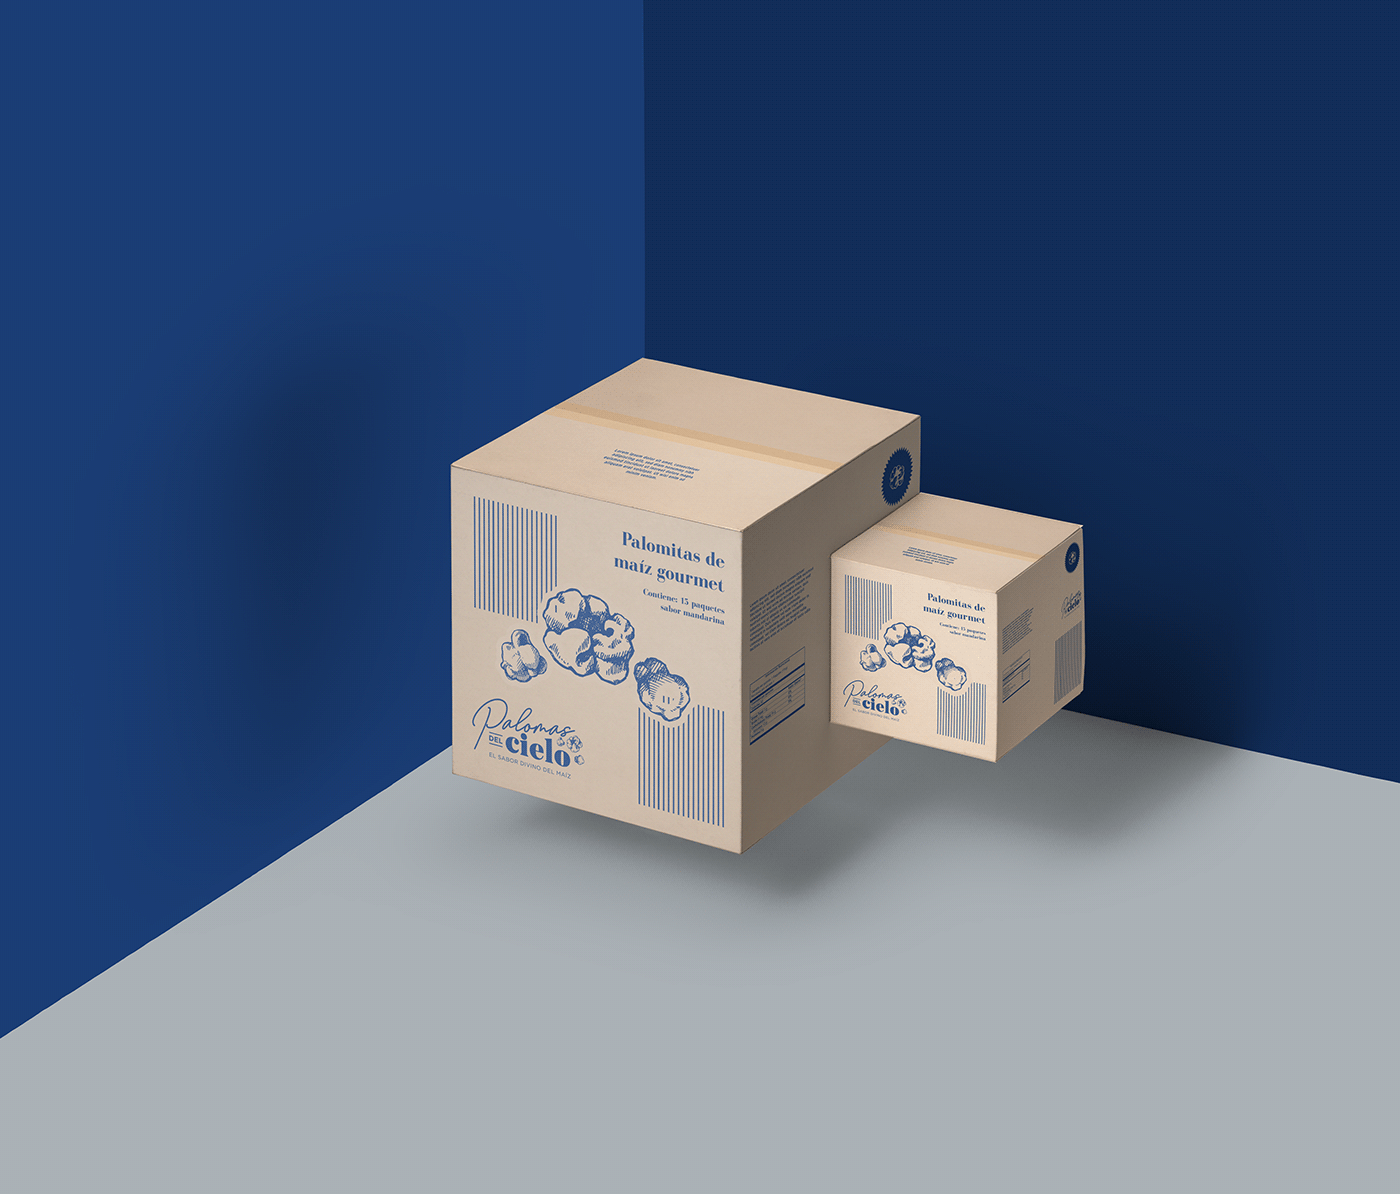 Image may contain: carton and cardboard